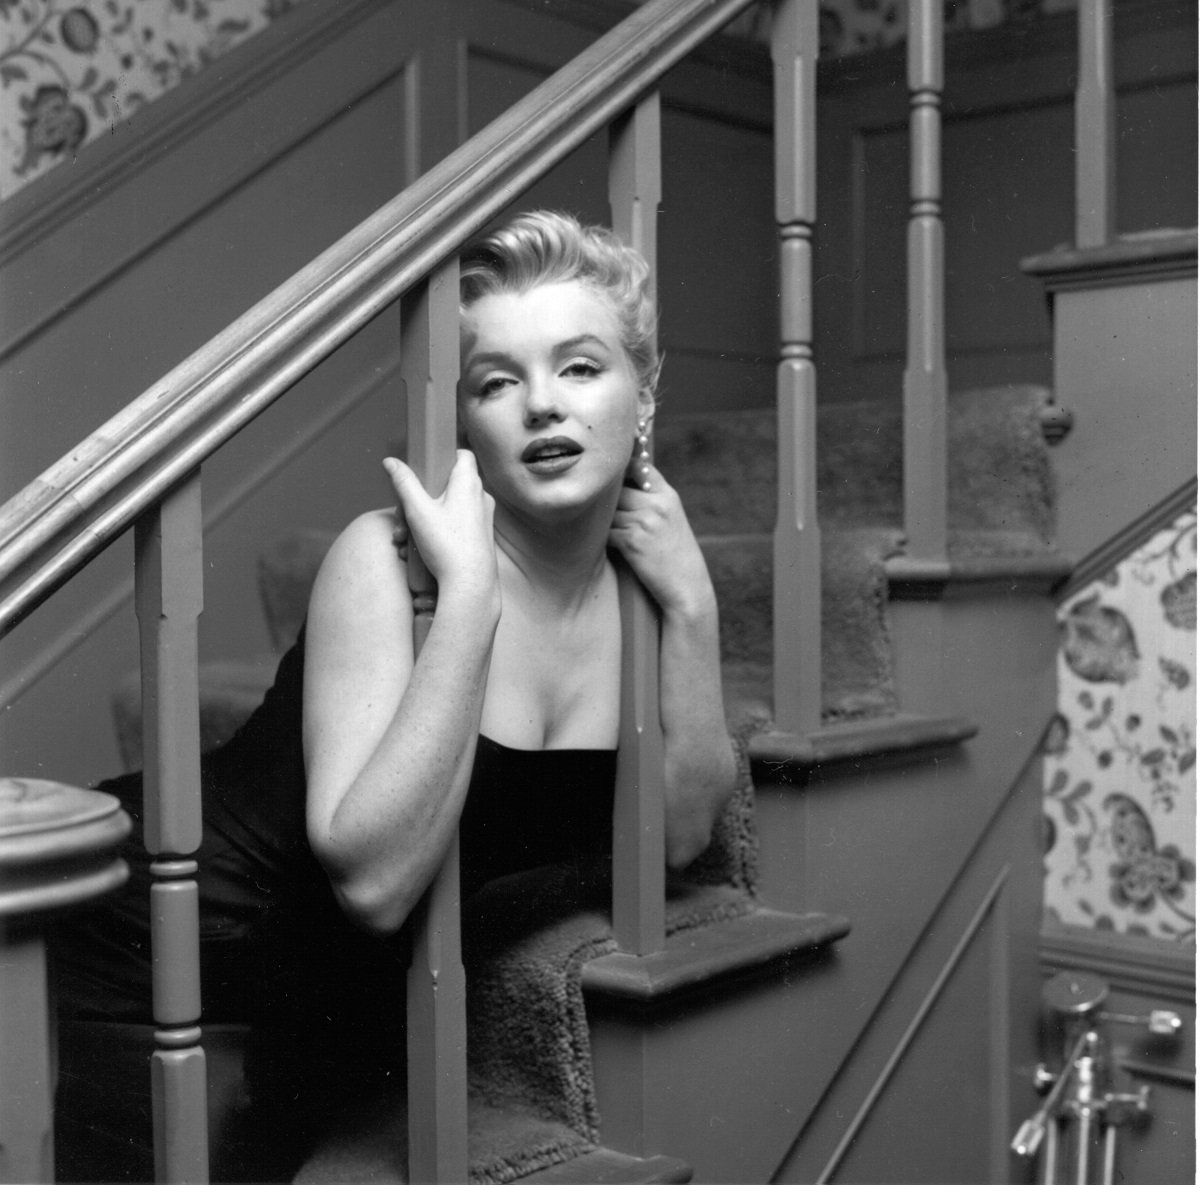 Marilyn Monroe 1956